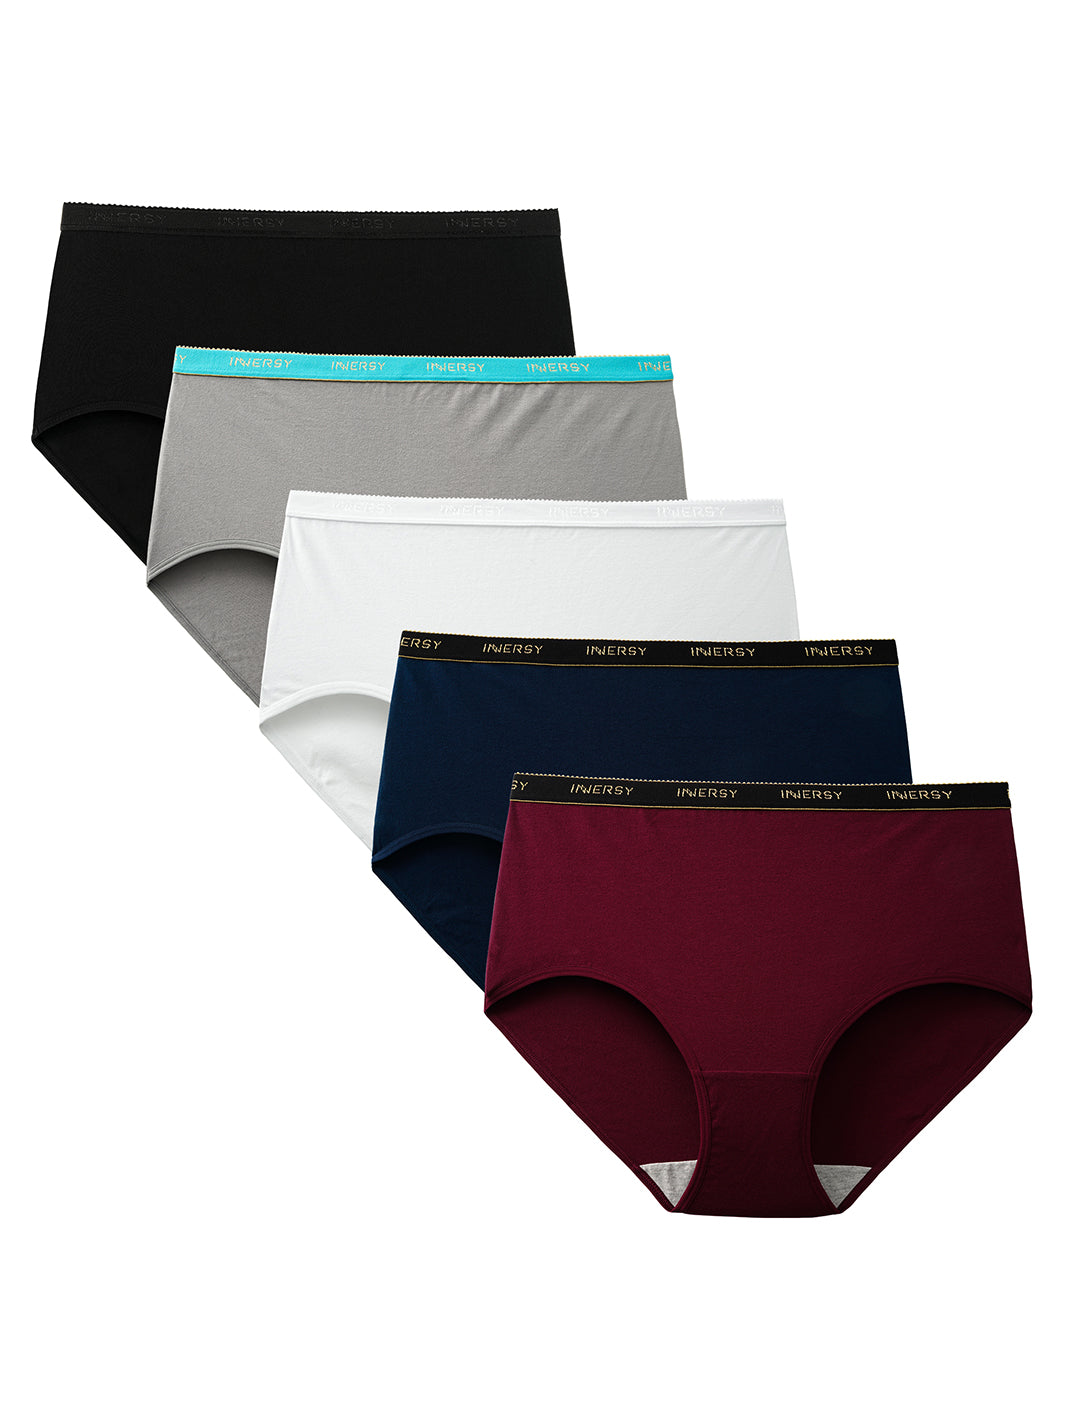 7Pack/Set High Waisted Cotton Underwear Ladies Soft Full Briefs Panties  M-5XL Cute Lady Women's Soft Seamless Antibacterial Briefs 